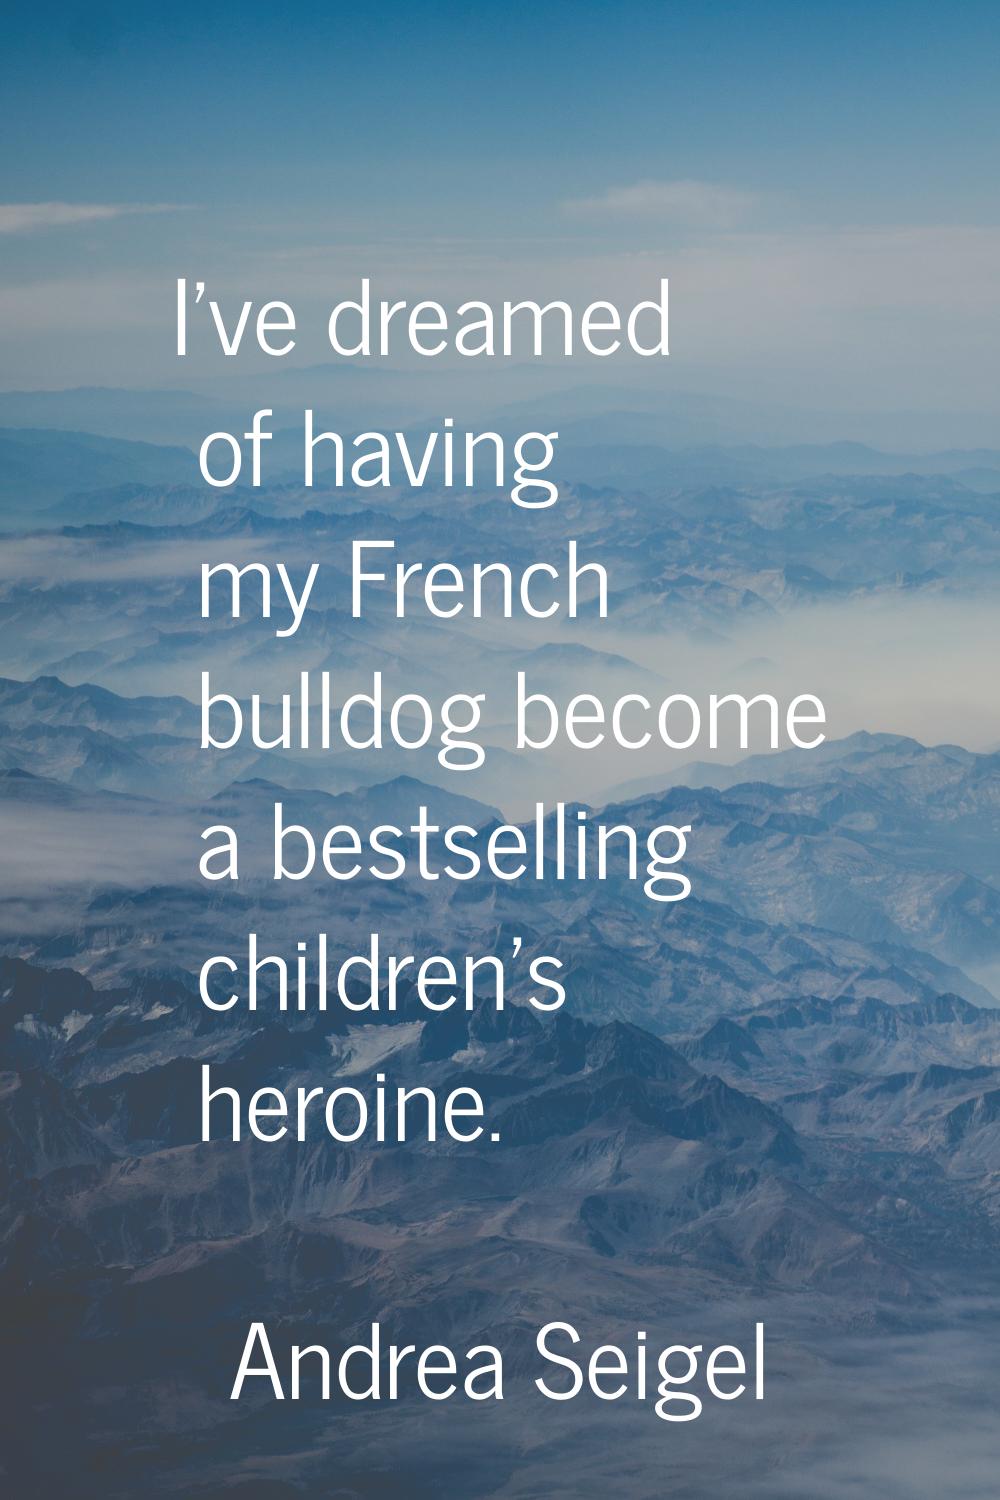 I've dreamed of having my French bulldog become a bestselling children's heroine.